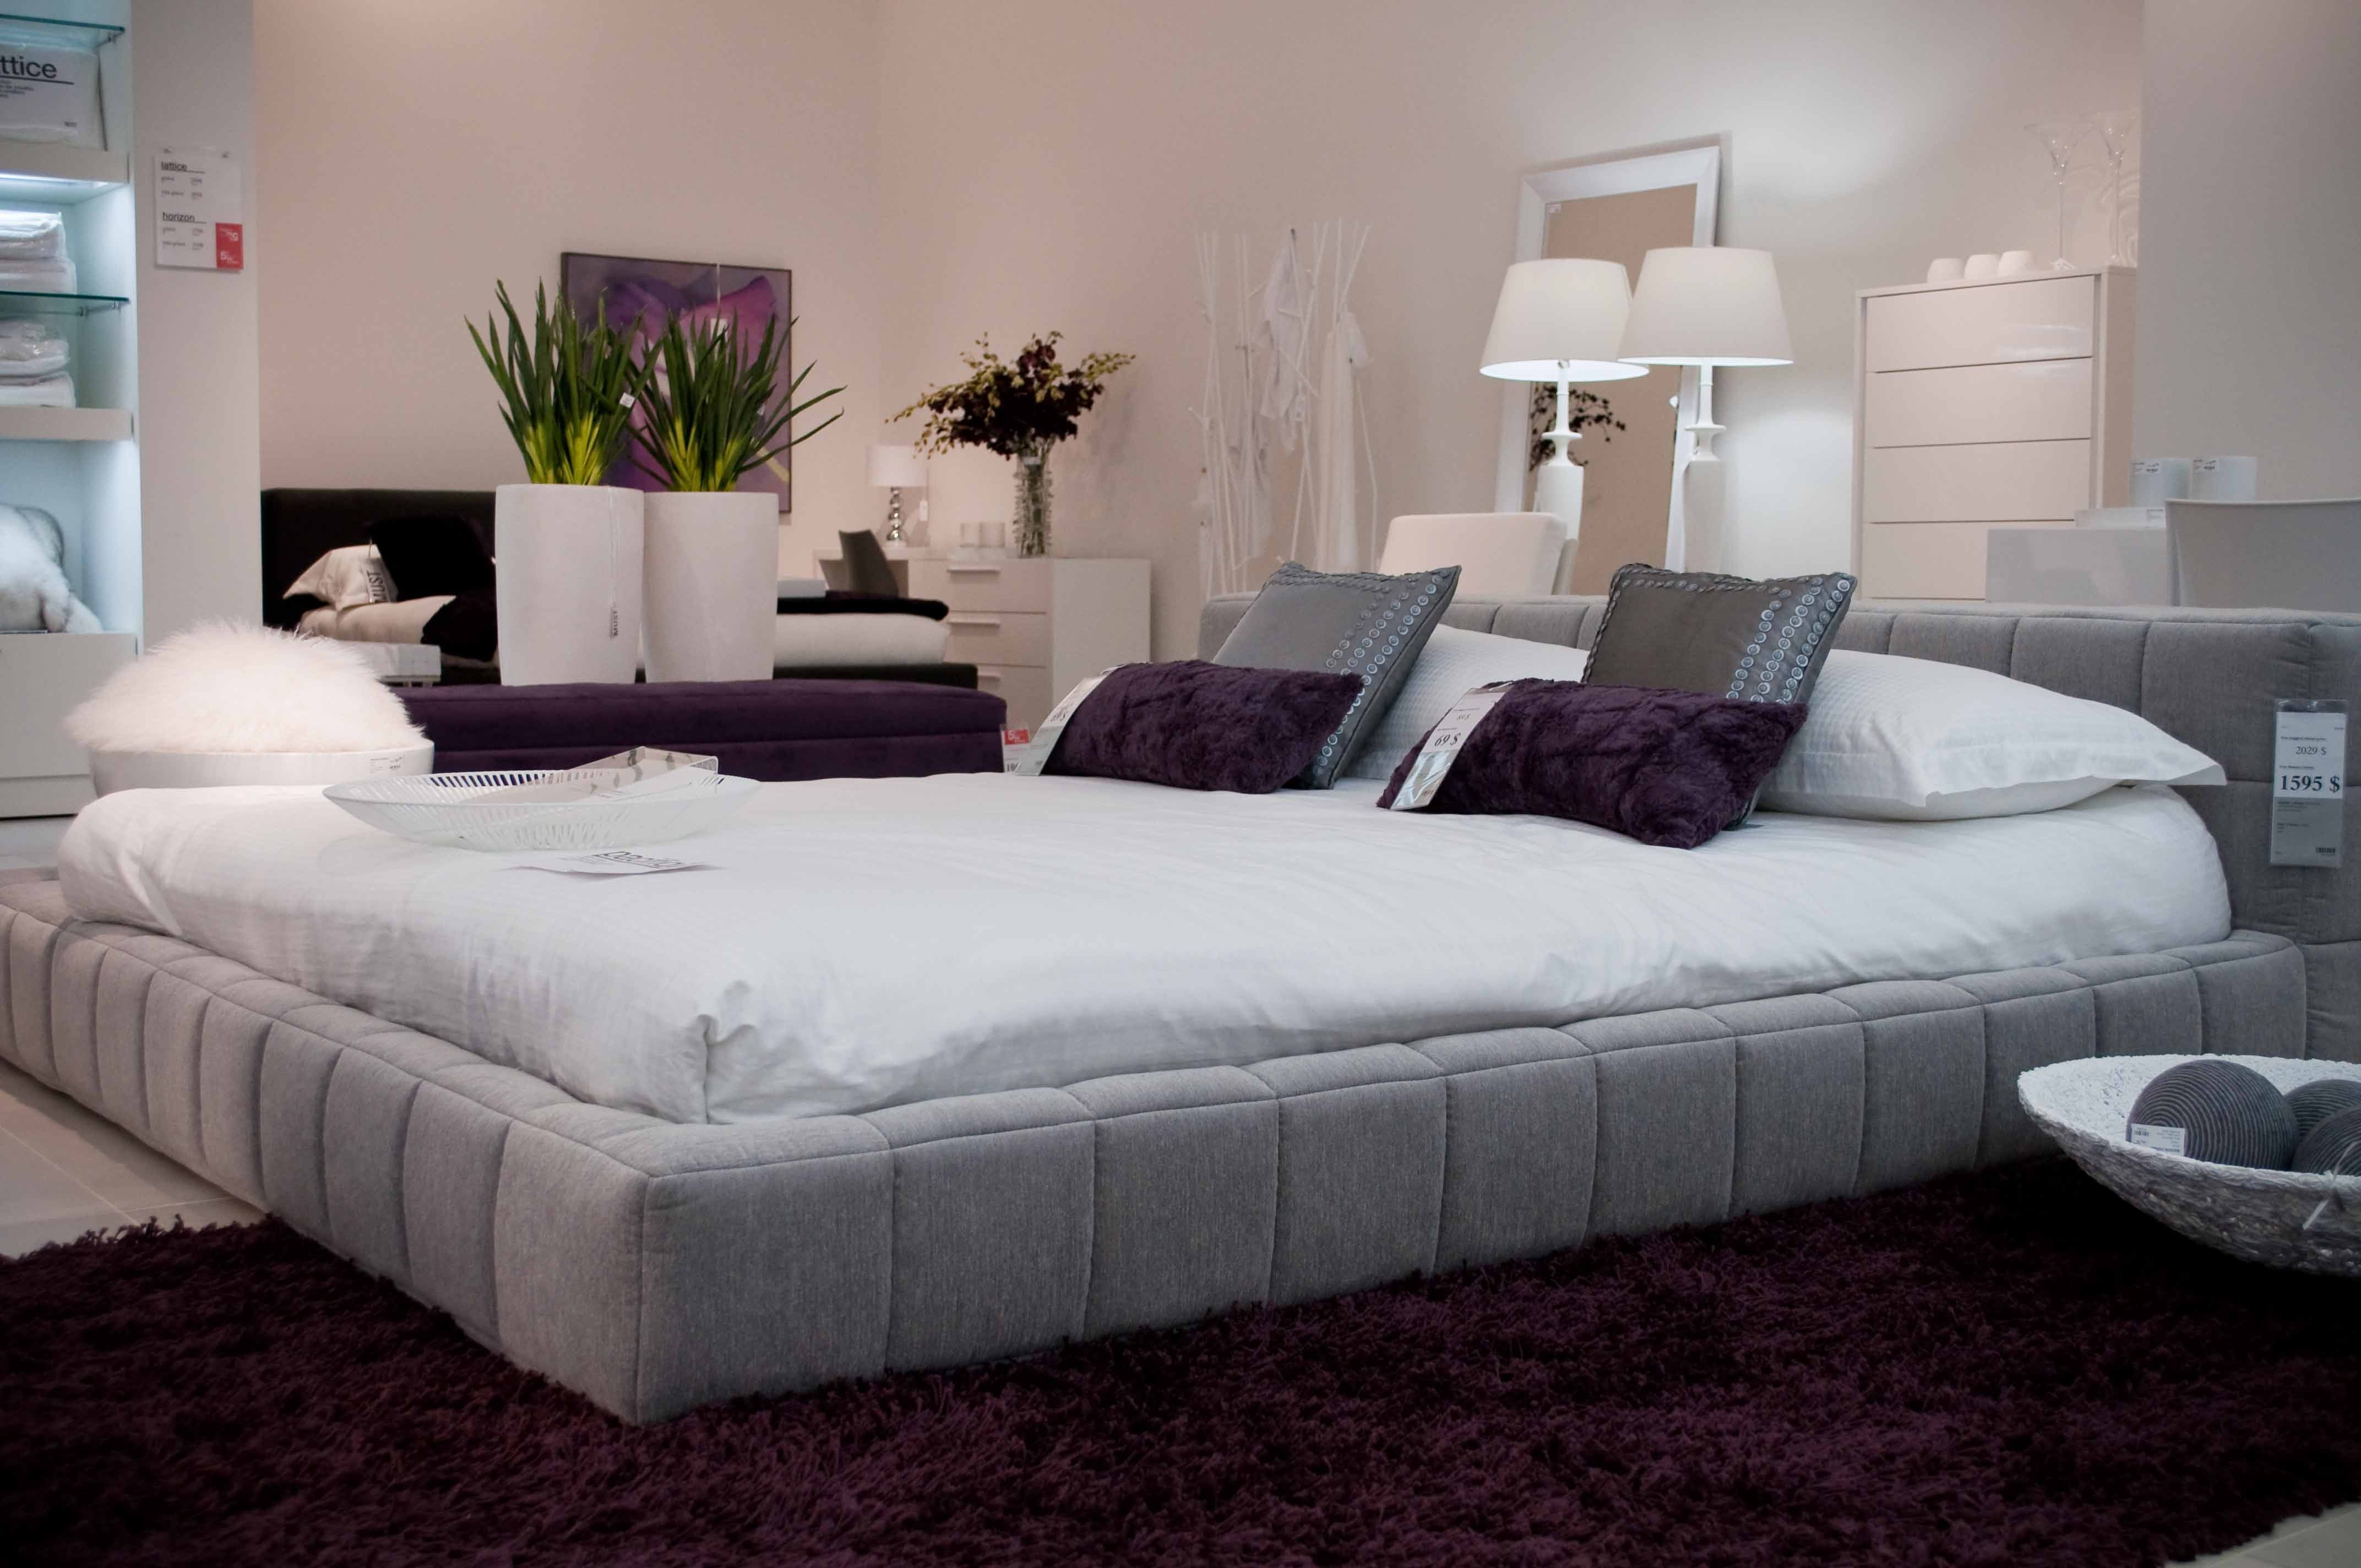 bed wallpaper,bed,furniture,bedroom,mattress,room